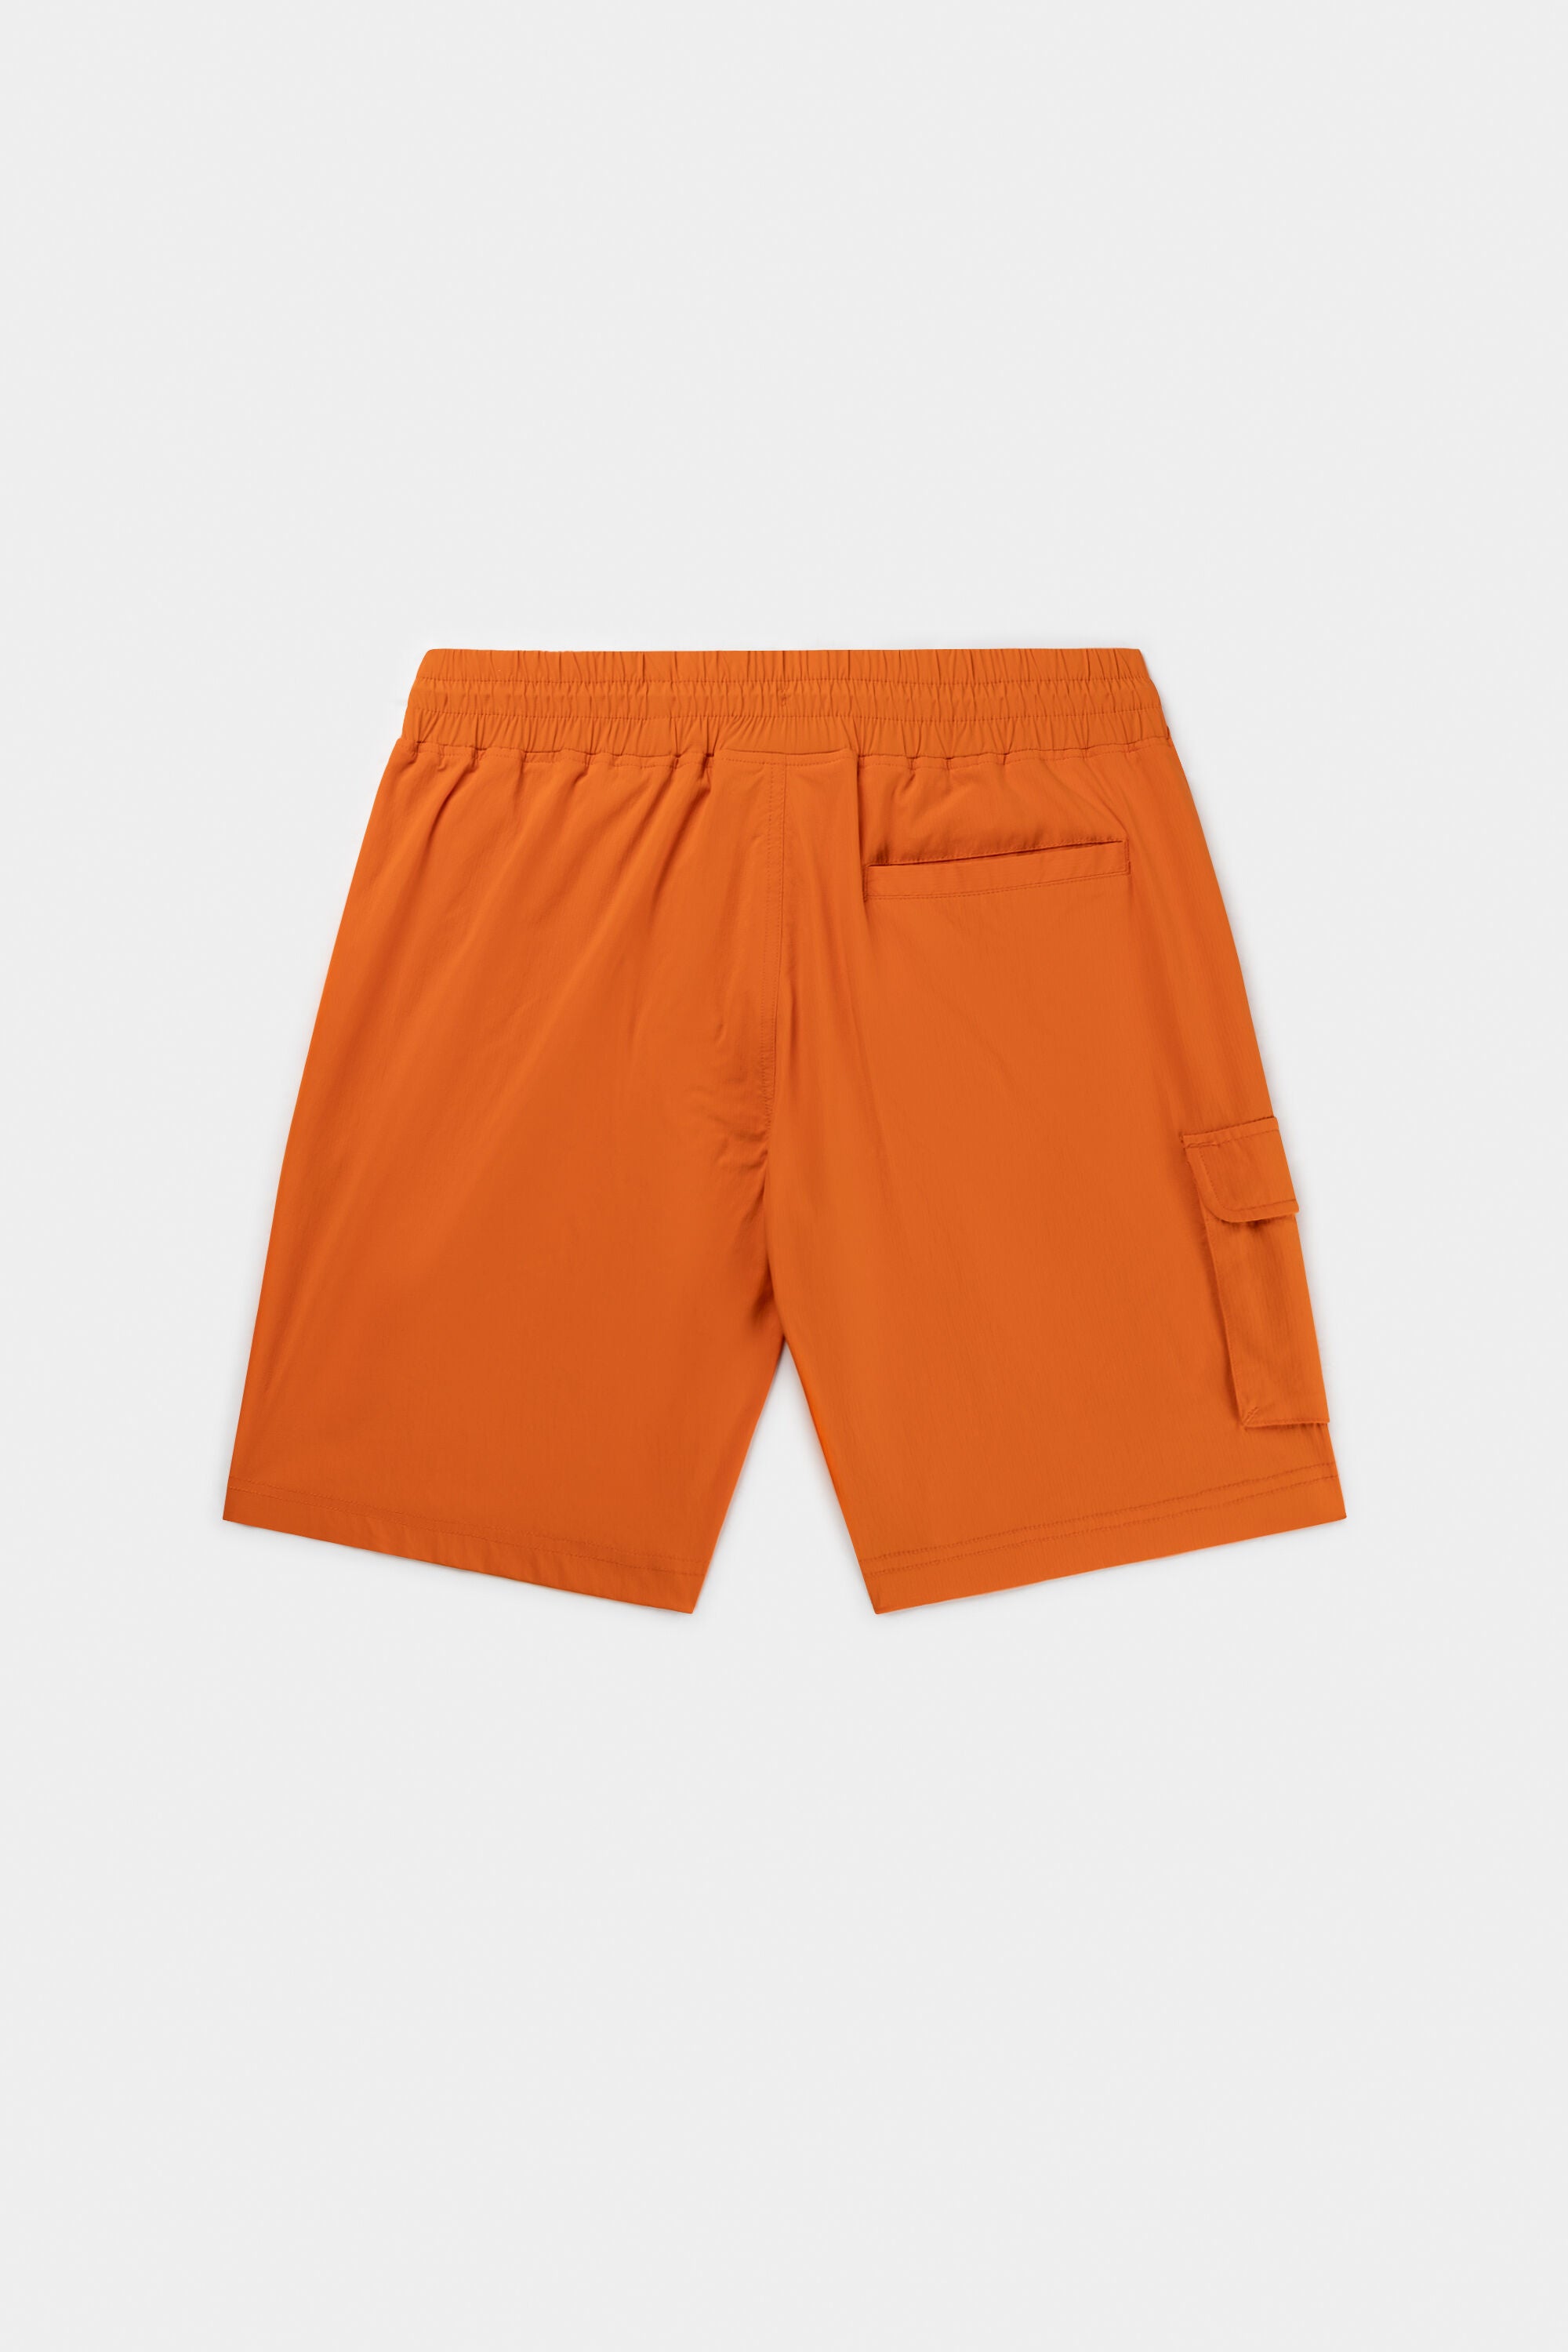 Hexline Regular Fit Cargo Shorts Orange